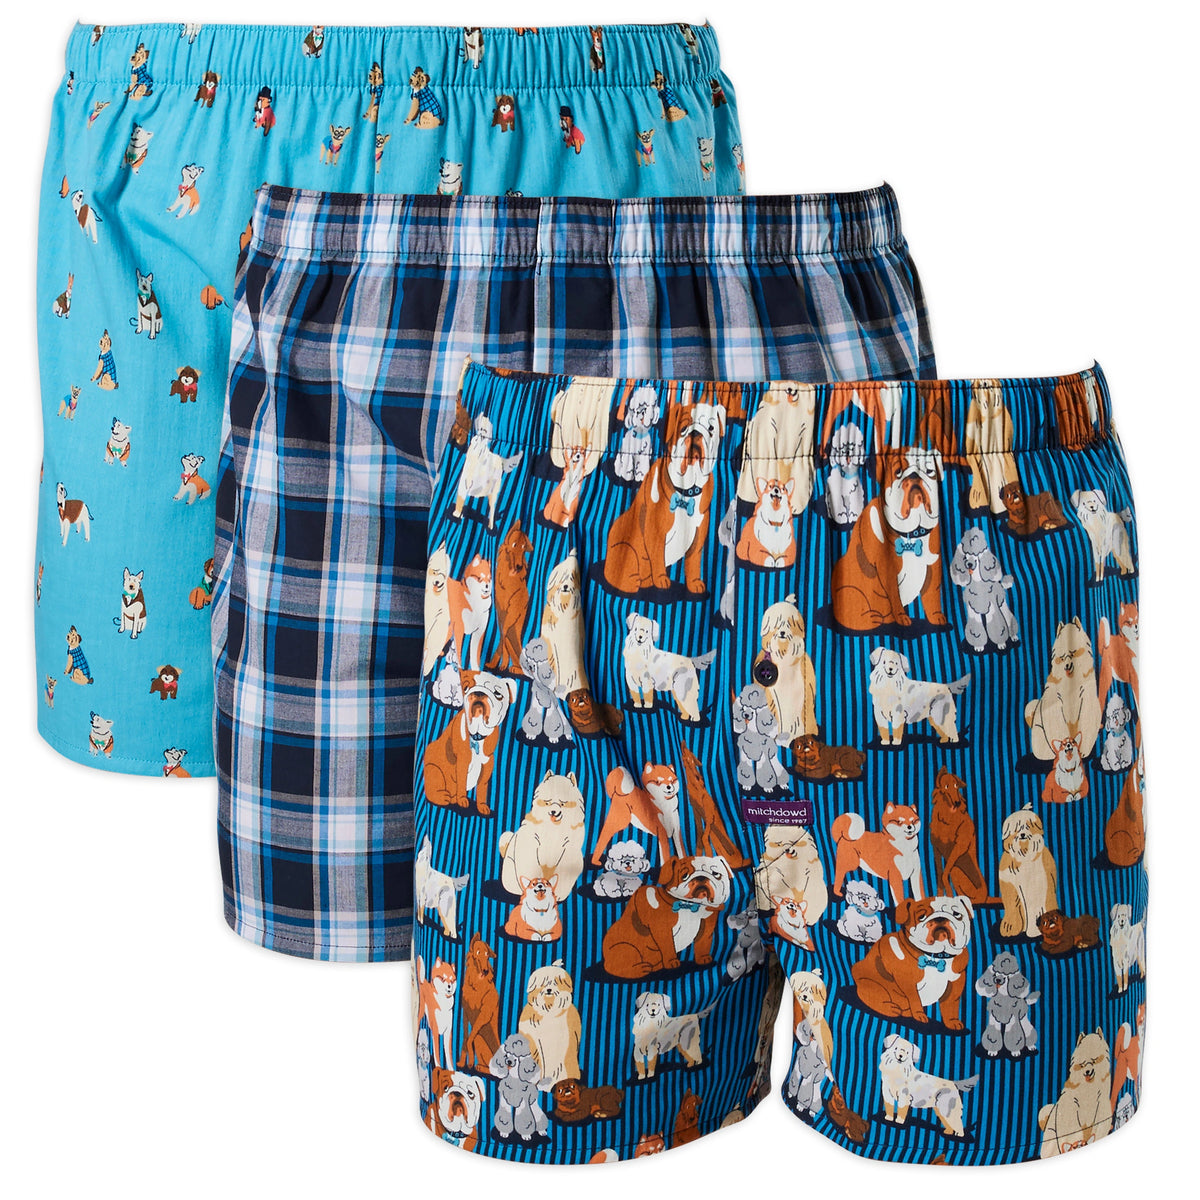 Mitch Dowd Men's Dog & Bone Cotton Loose Fit Knit Boxer Shorts 3